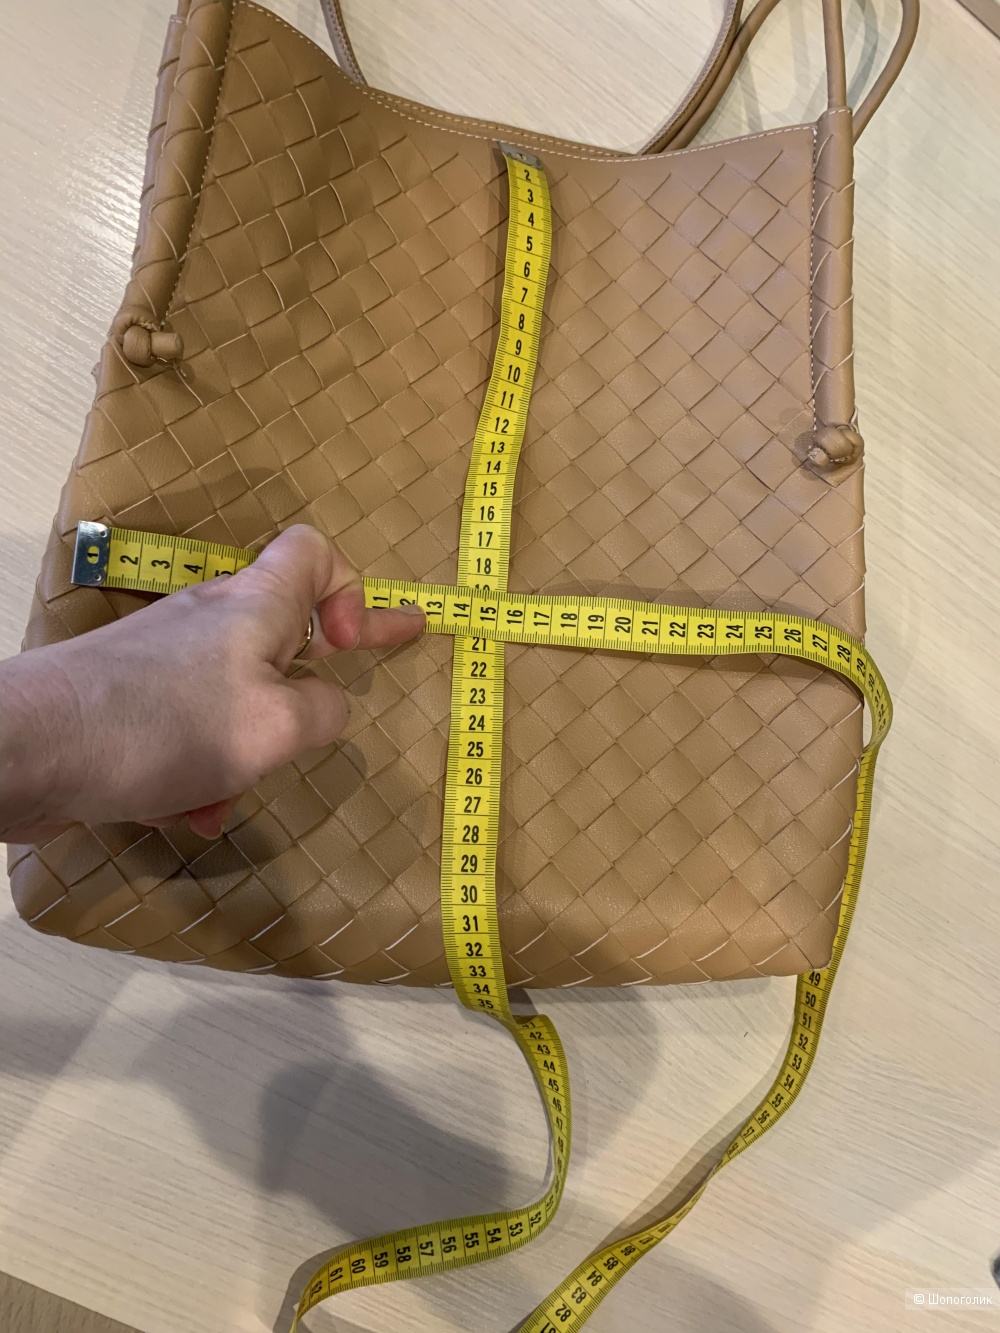 Кожаная сумка-шопер marco bonne